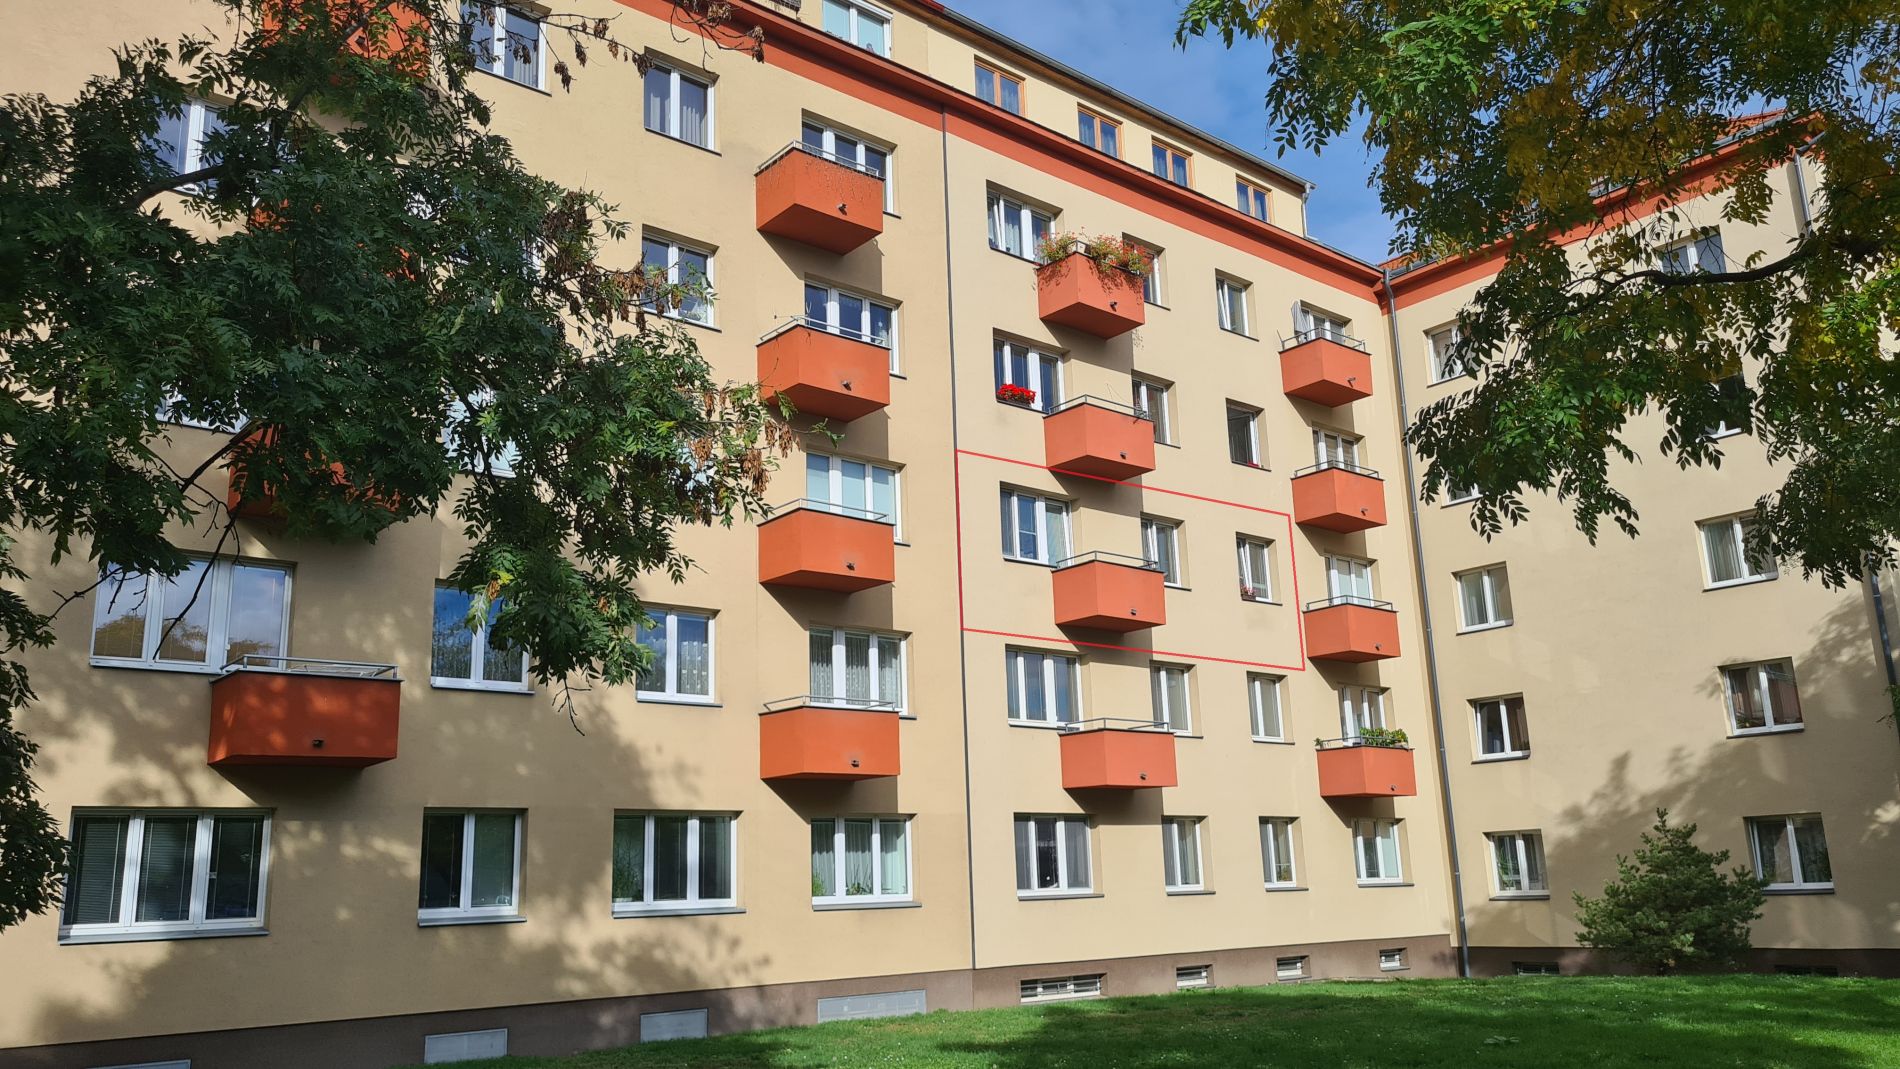 Prodej slunného pěkného bytu v os. vl. 3 + 1, Praha 9-Libeň, ul. Čihákova /Sokolovská/, obrázek č. 1